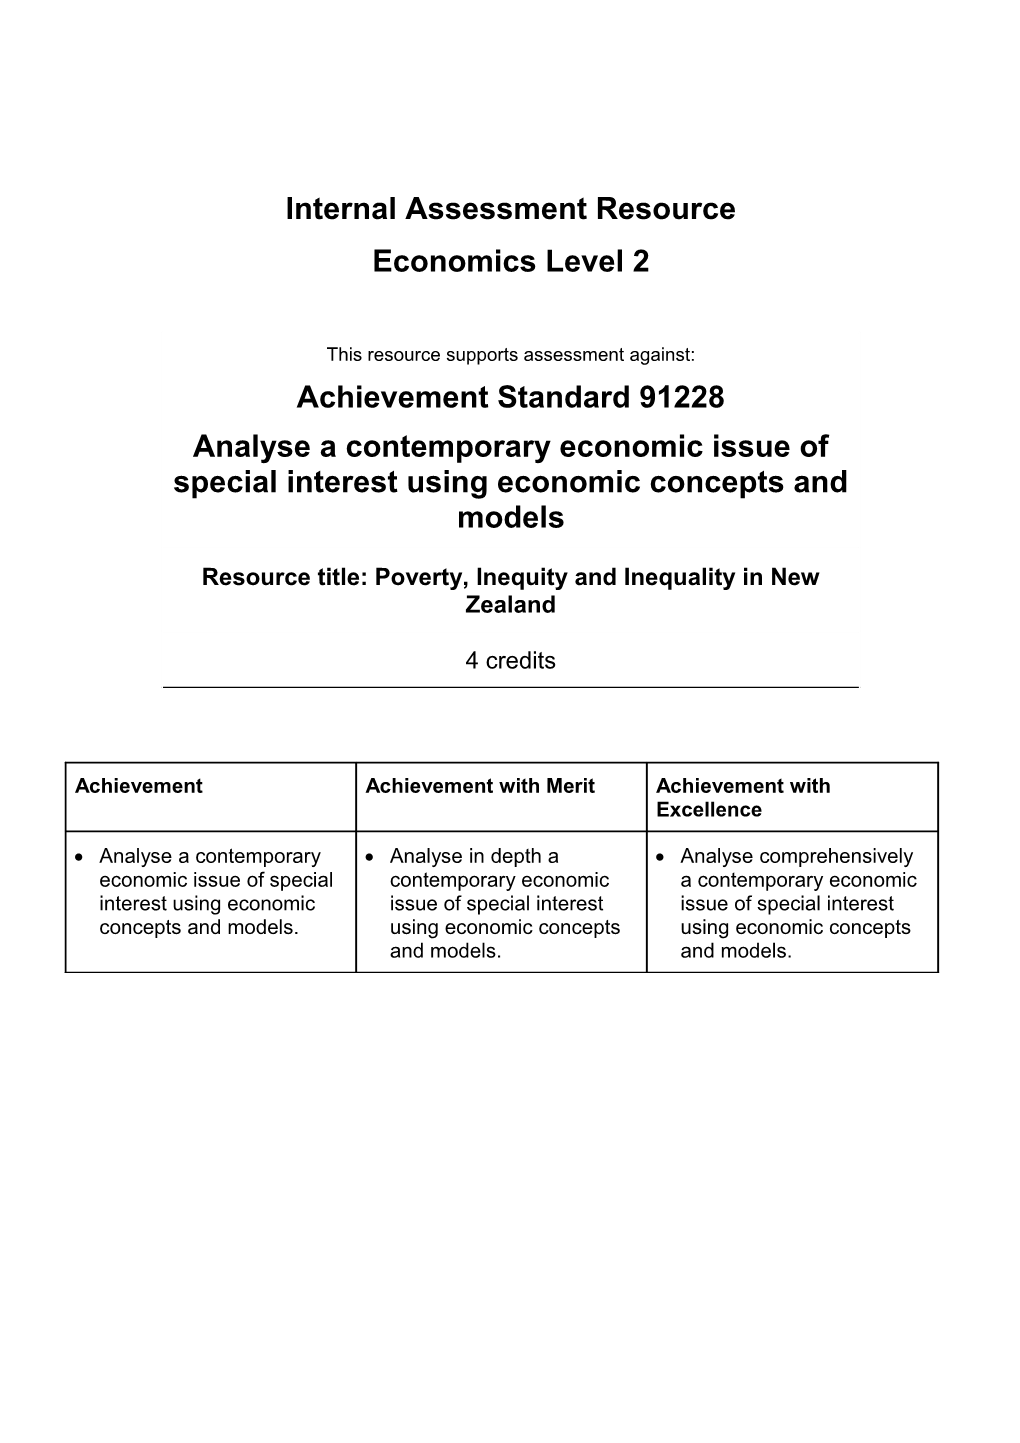 Level 2 Economics Internal Assessment Resource